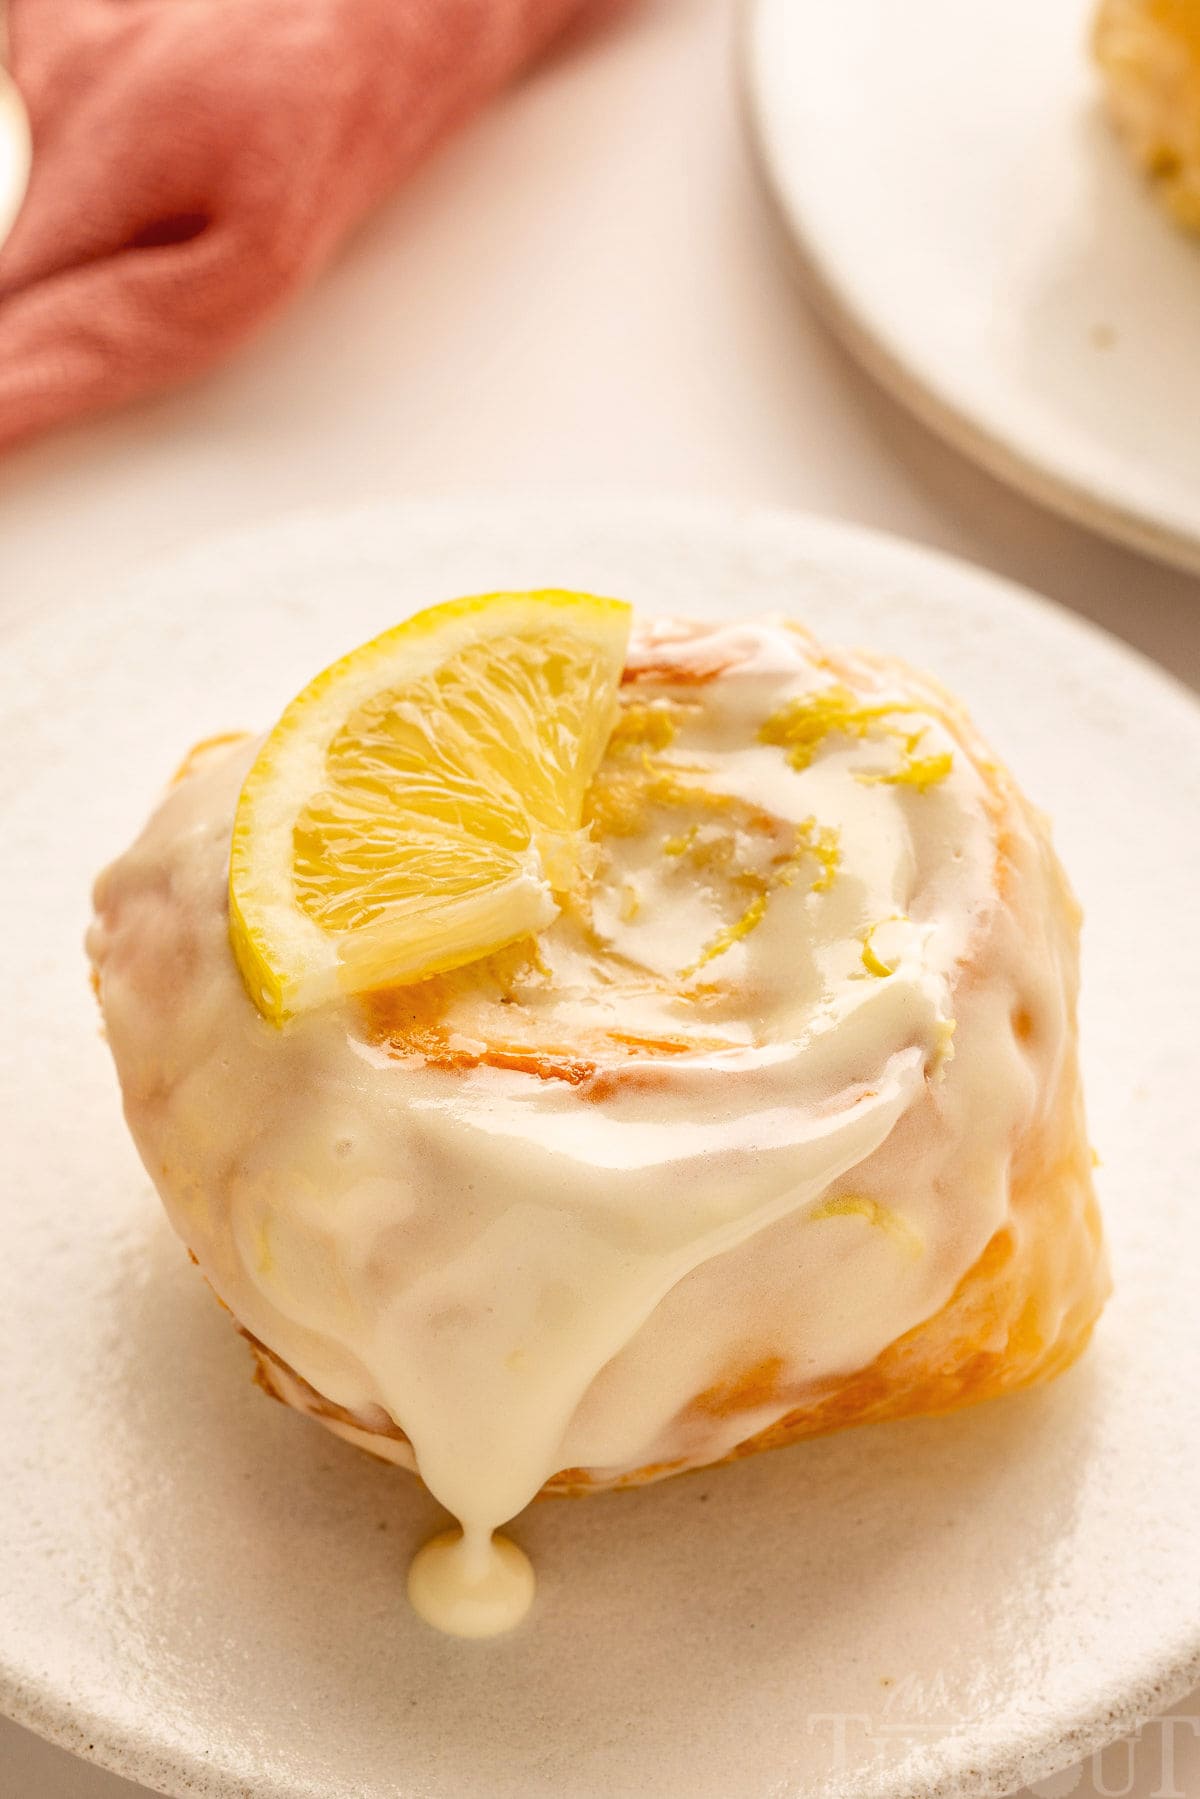 A lemon roll on a white plate.